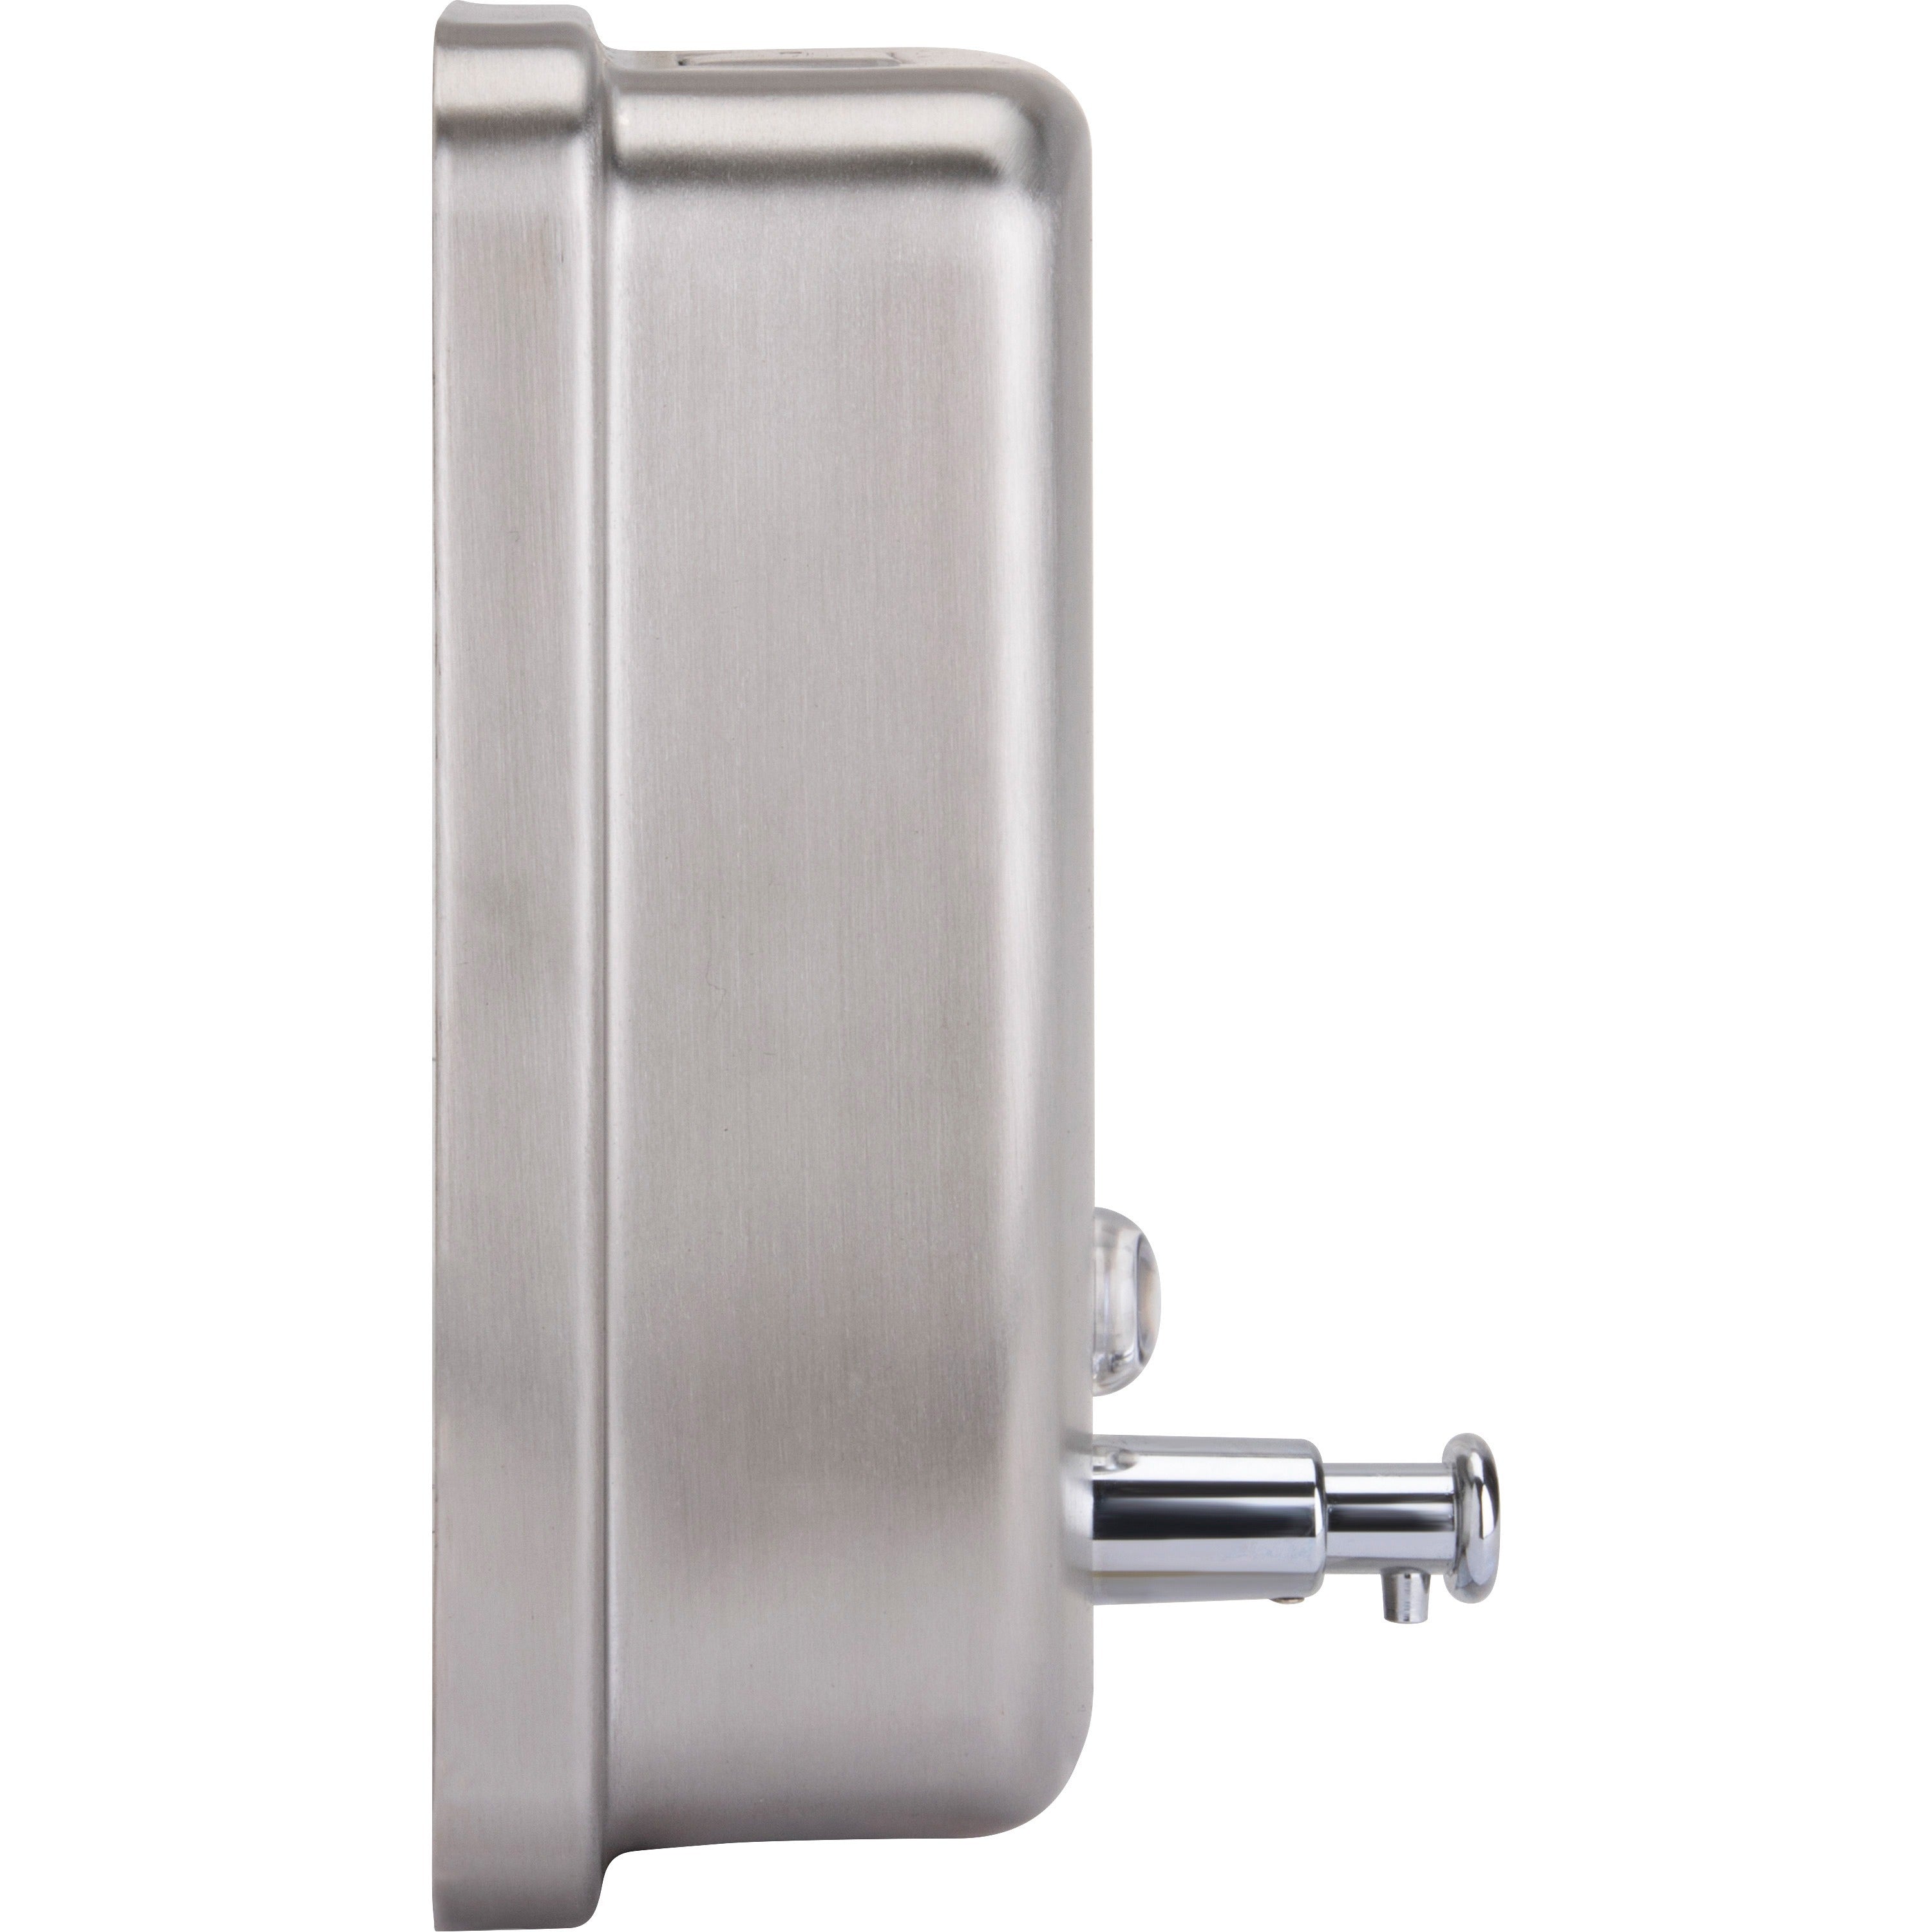 genuine-joe-liquid-lotion-soap-dispenser-manual-3150-fl-oz-capacity-corrosion-resistant-wall-mountable-rust-proof-stainless-steel-1each_gjo02201 - 5